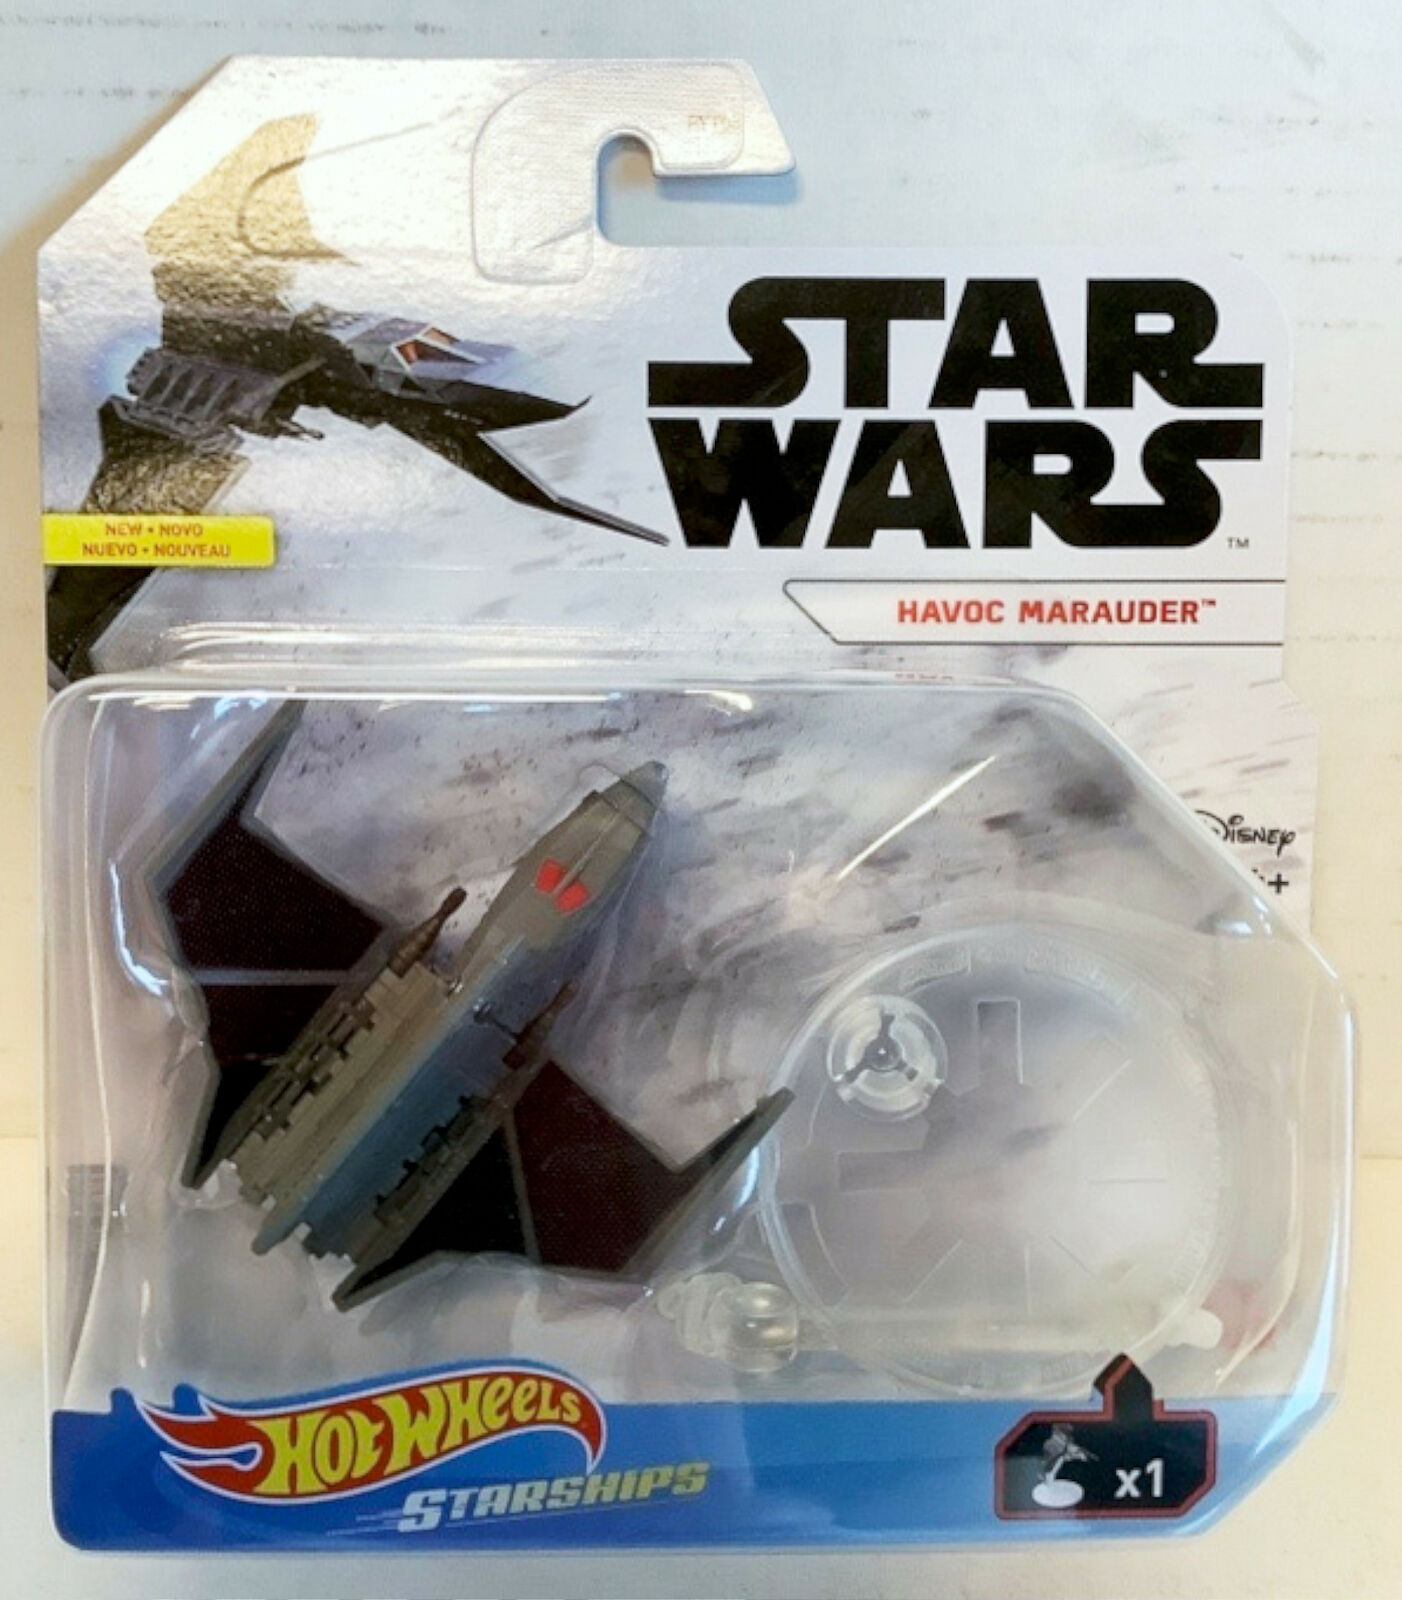 NEW Mattel GVF59 Hot Wheels Starships Star Wars HAVOC MARAUDER Die-Cast Vehicle